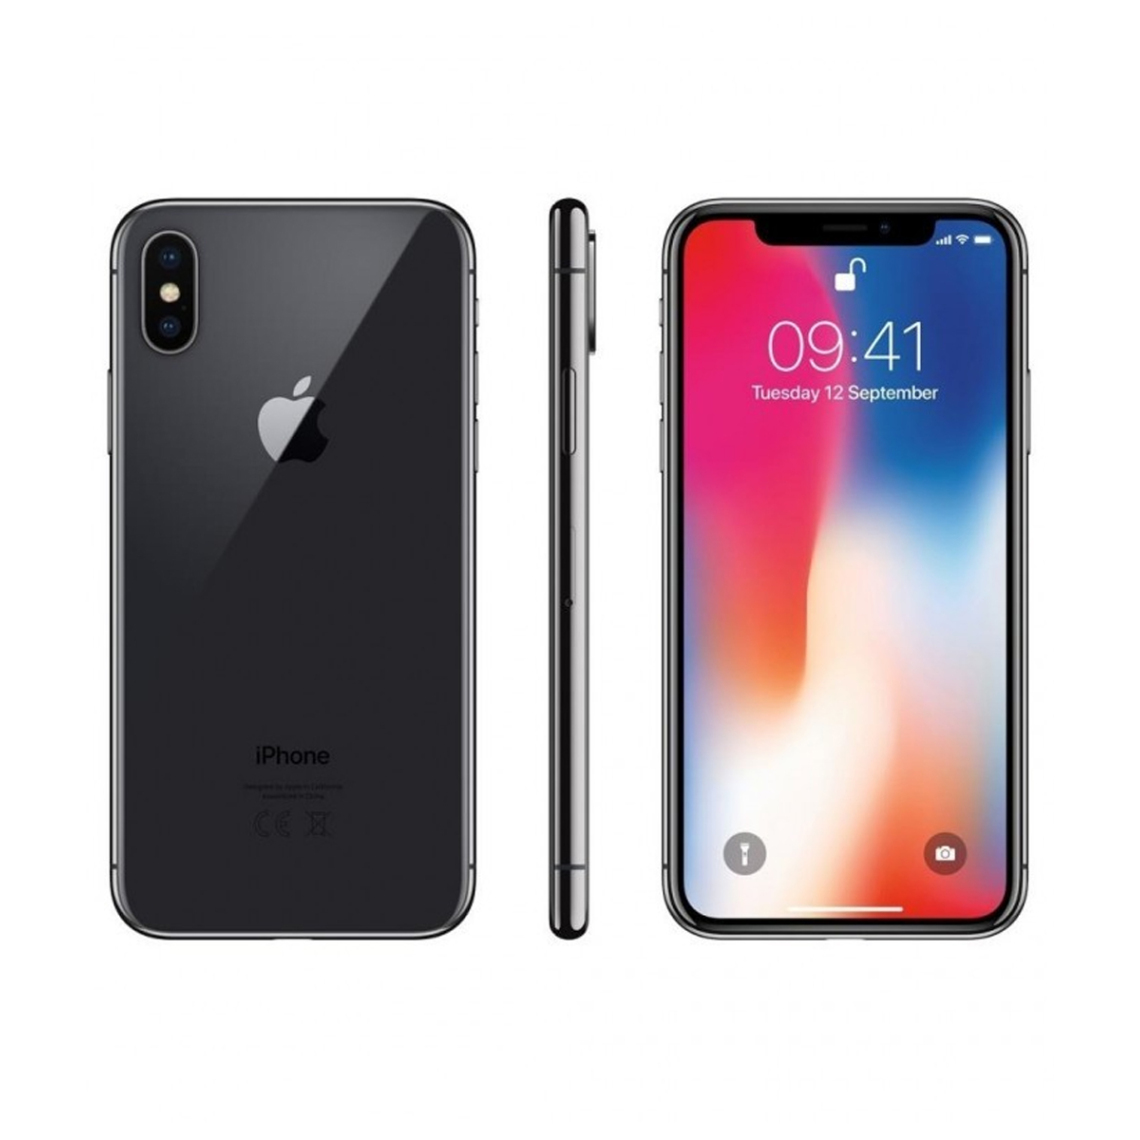 Apple - Apple iPhone X - 64GB - Space gray - iPhone